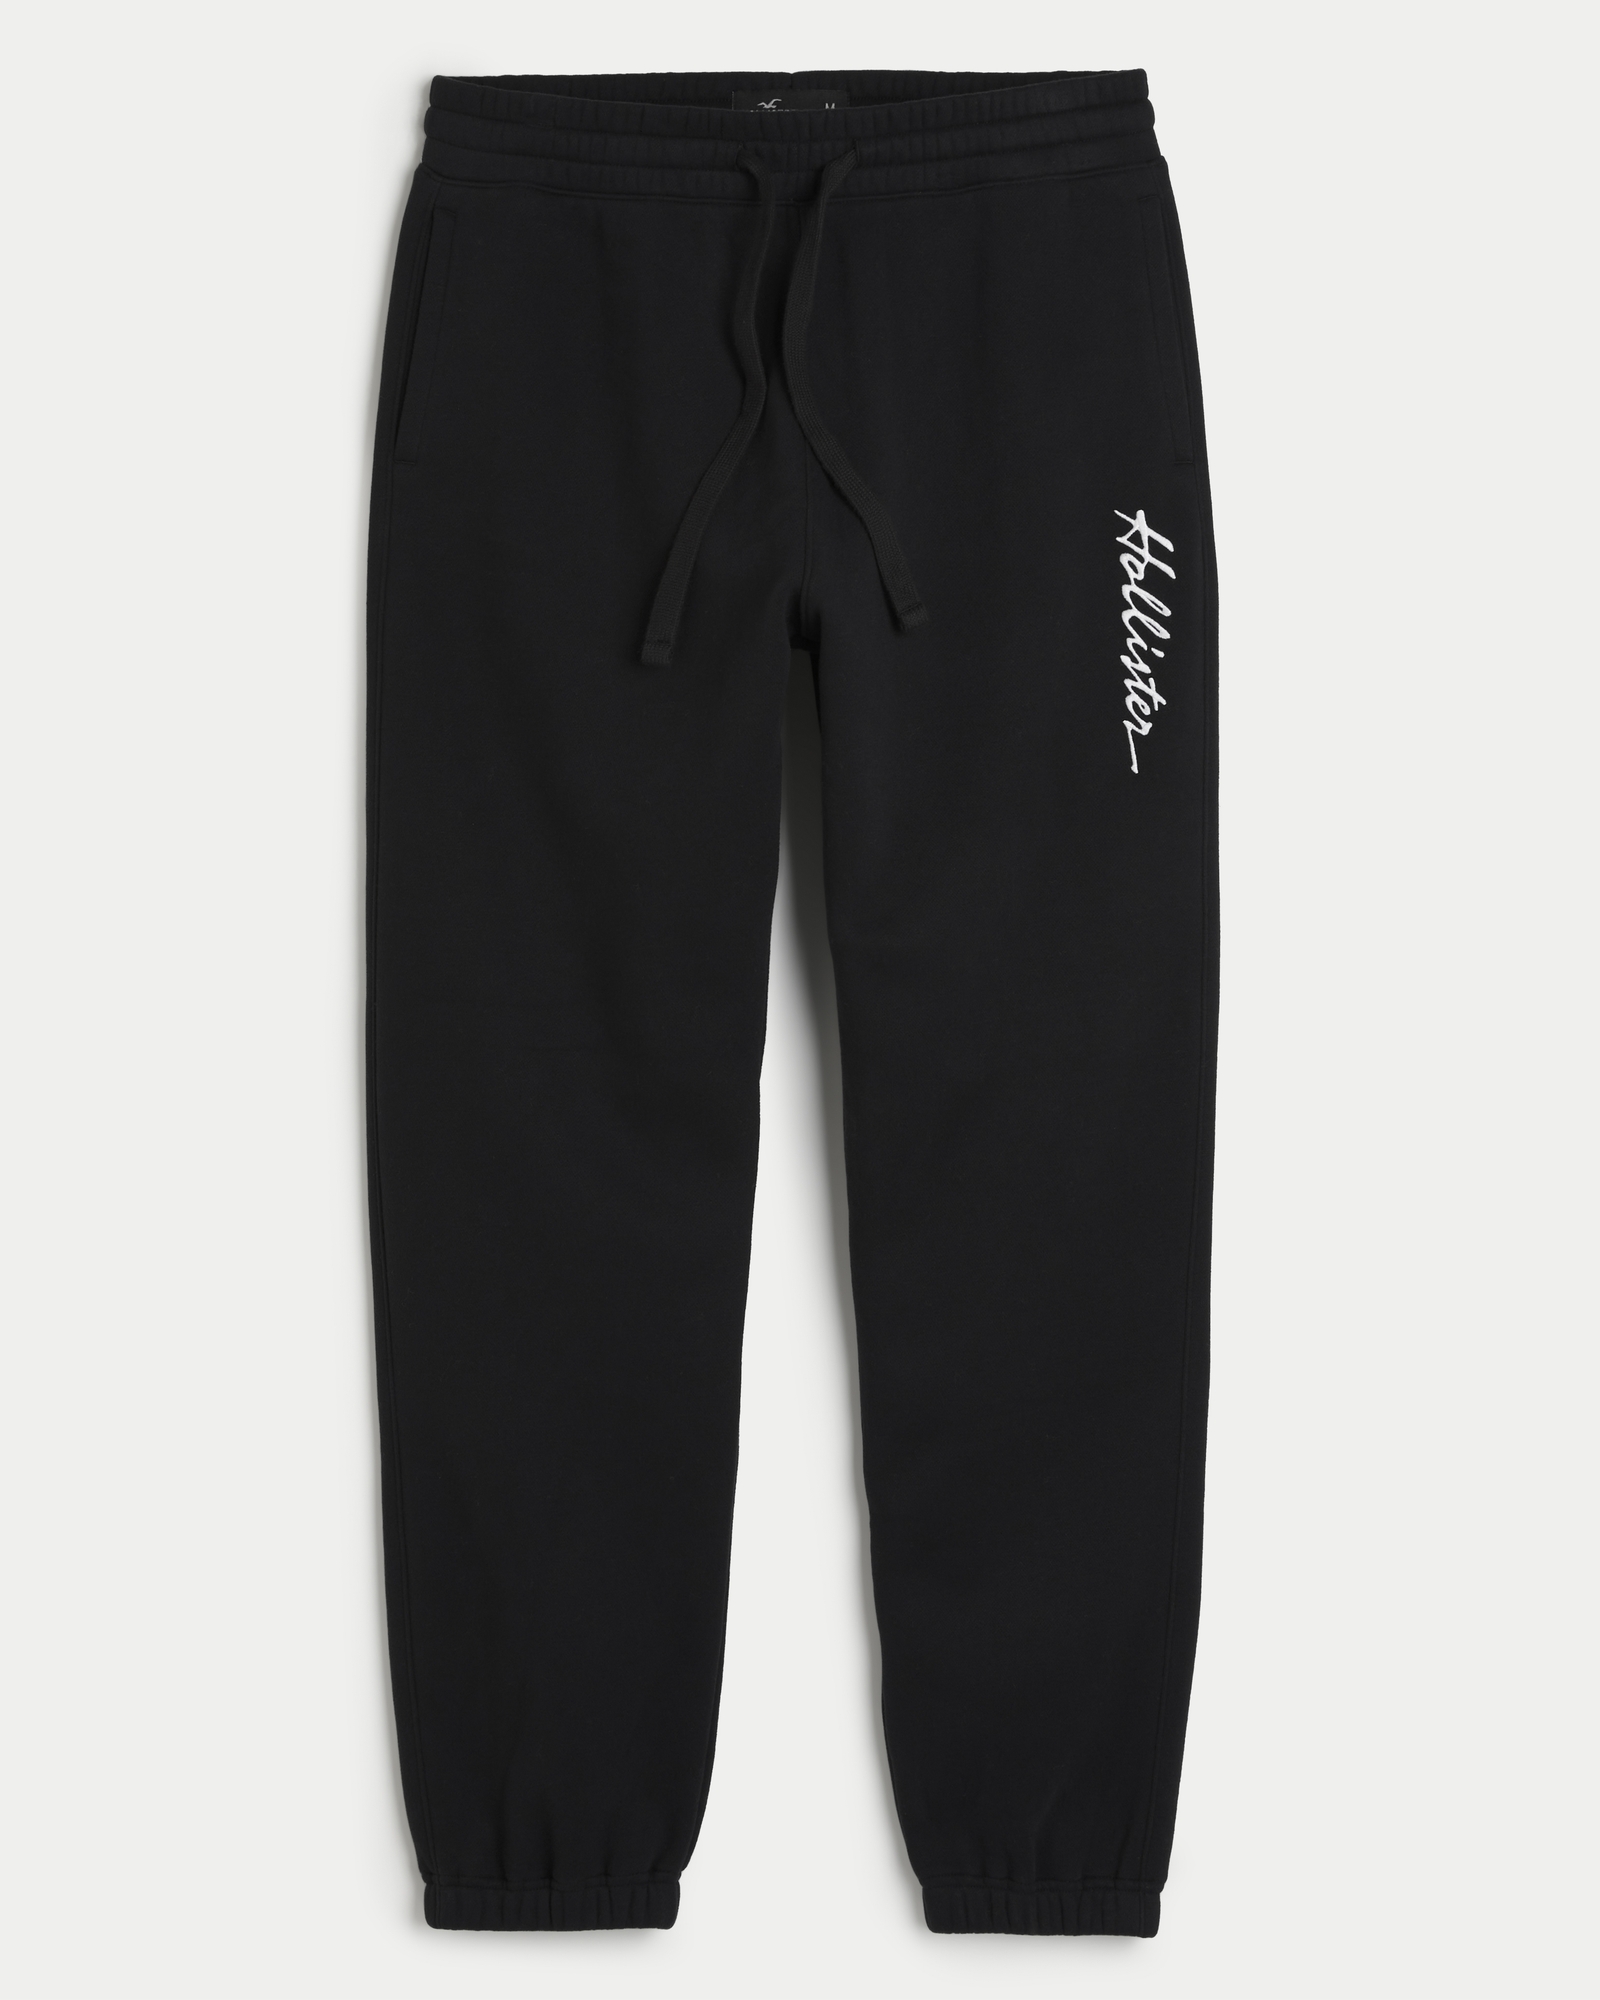 Hollister logo side sweatpants in black